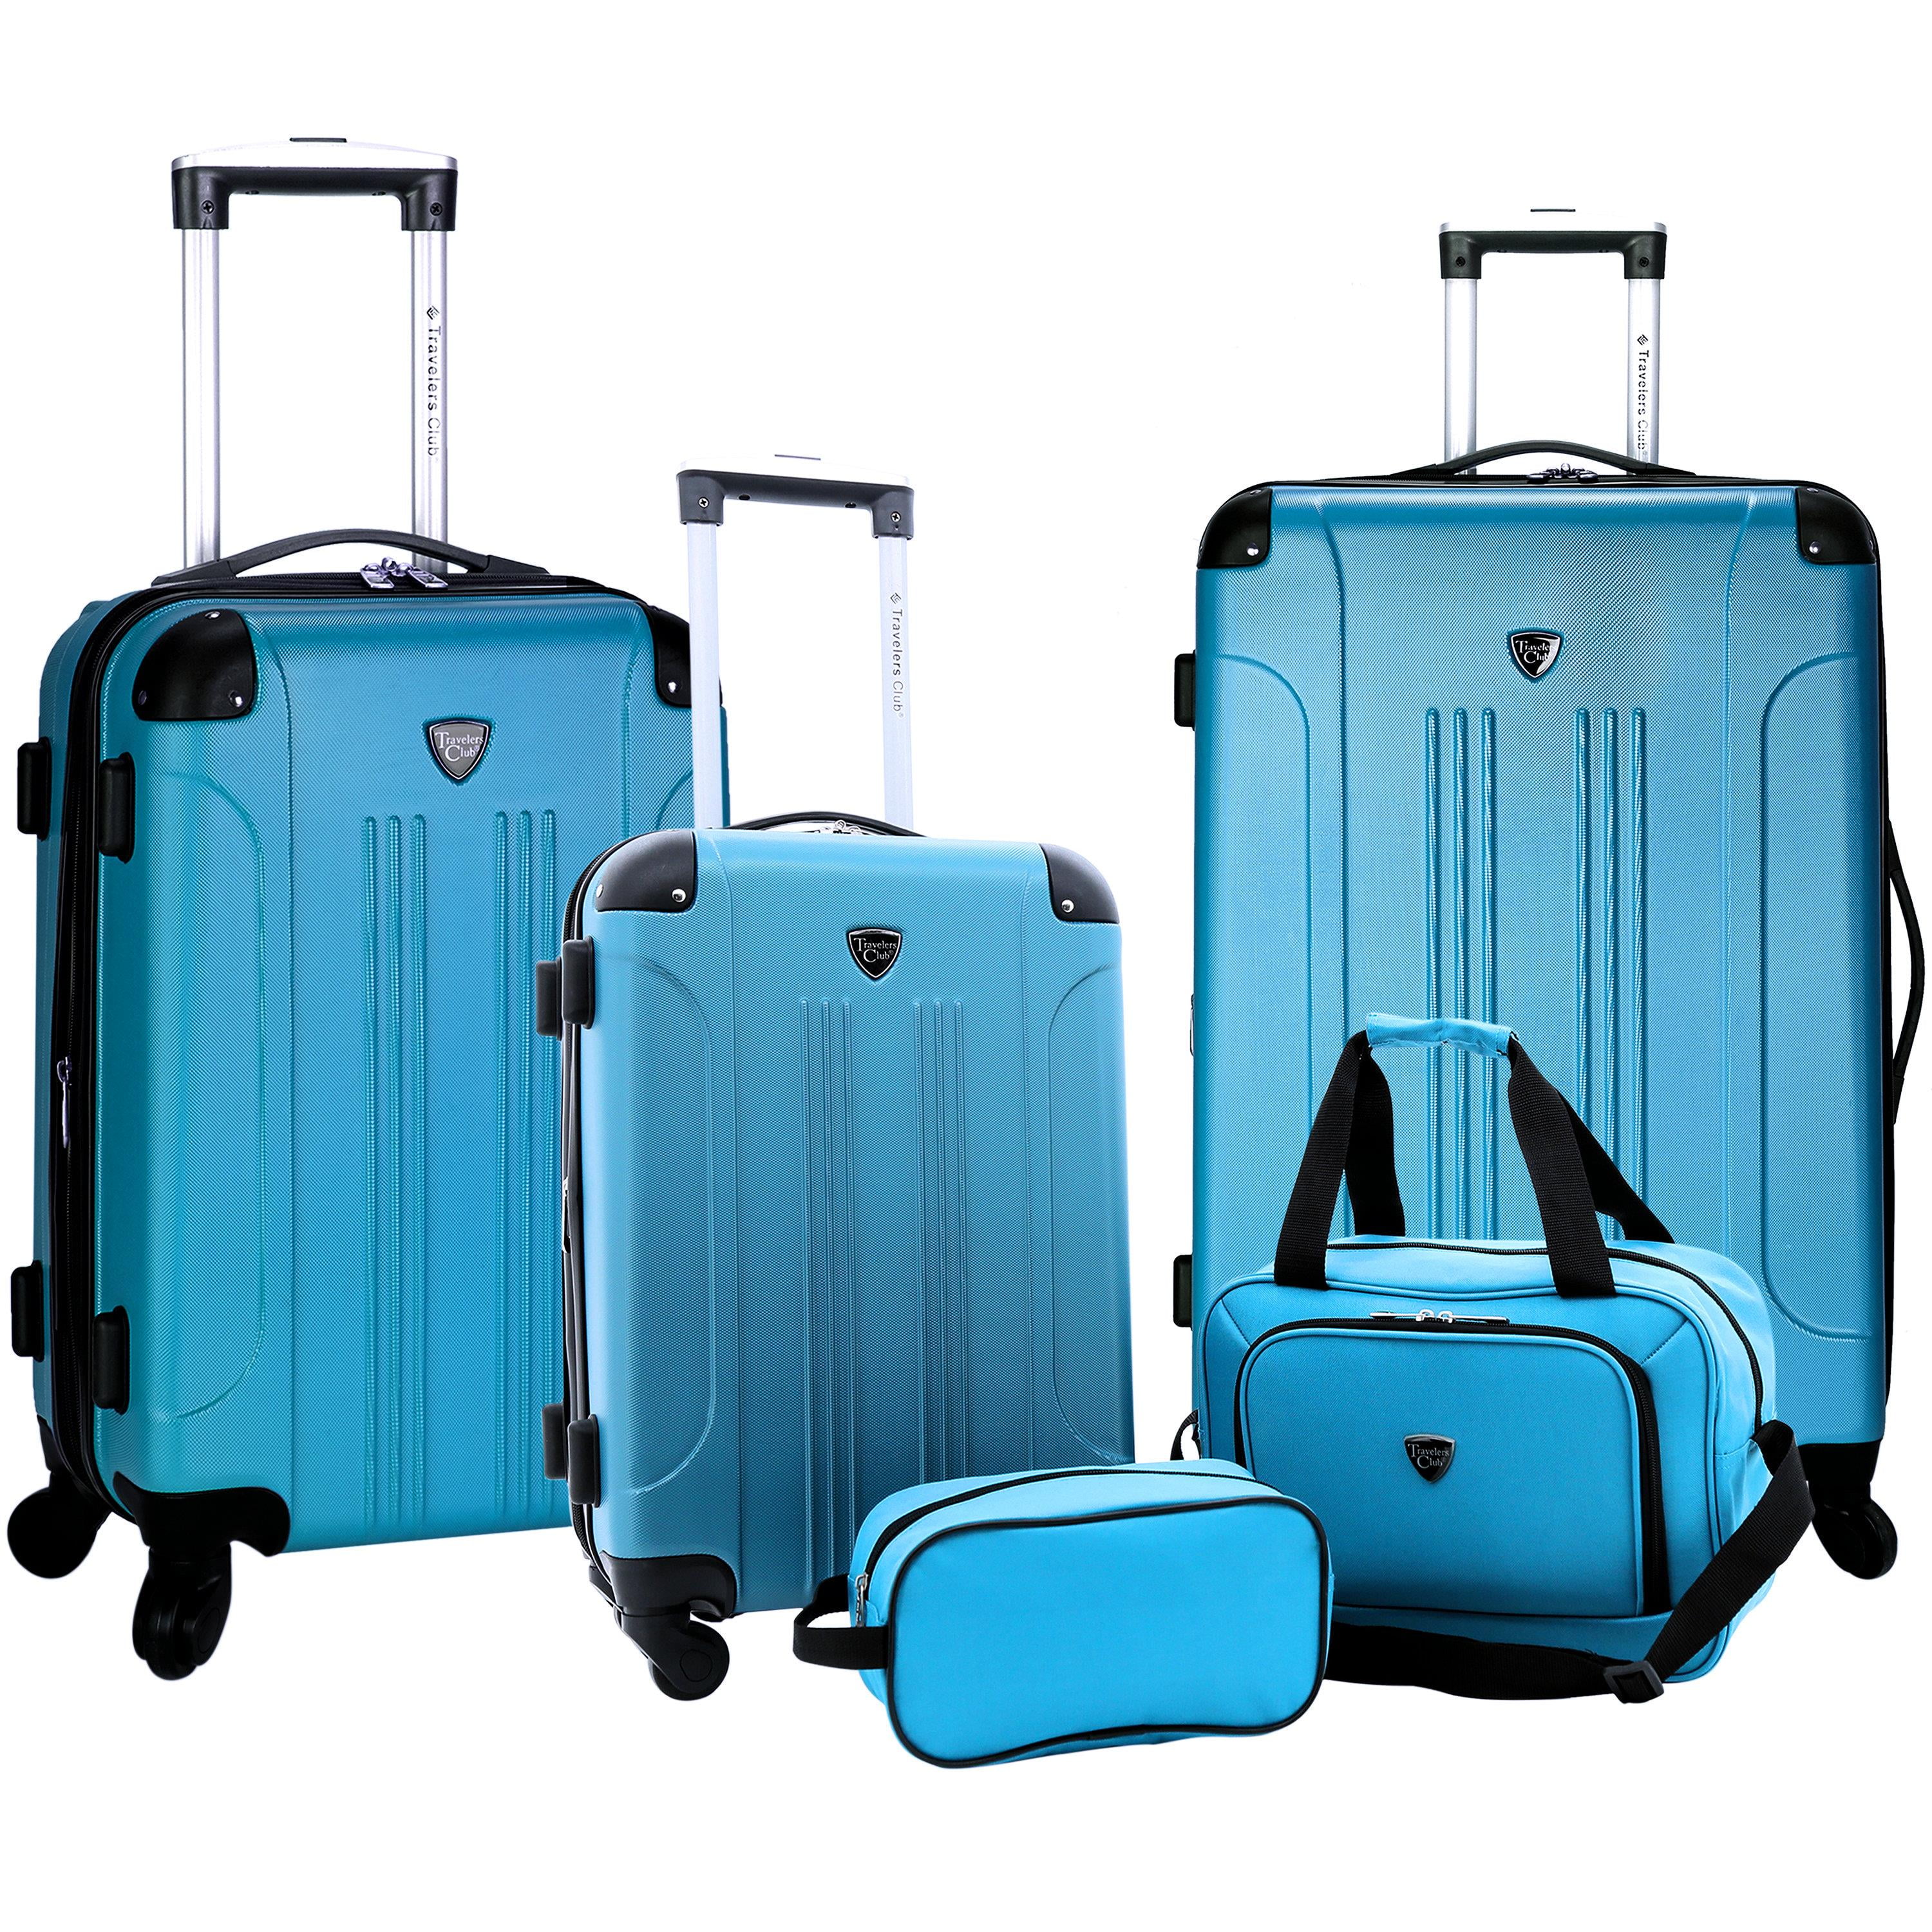 travellers club luggage reviews